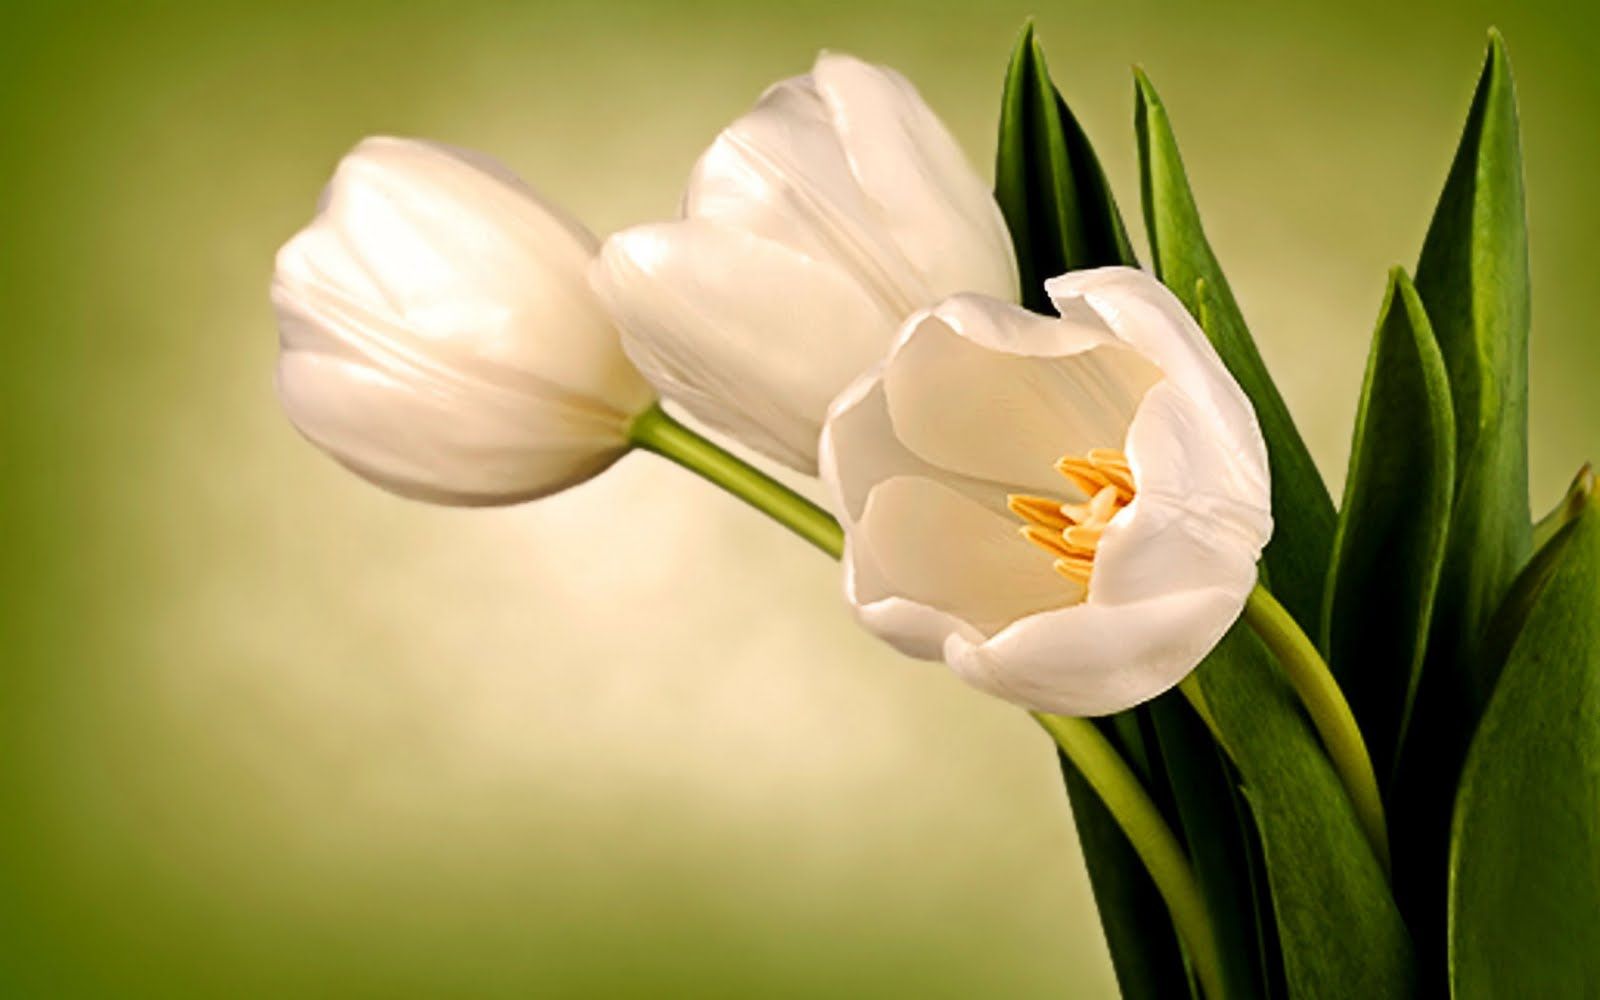 White-Tulips-Flowers-Wallpaper-Stem-Image-Tablet-Picture.jpg